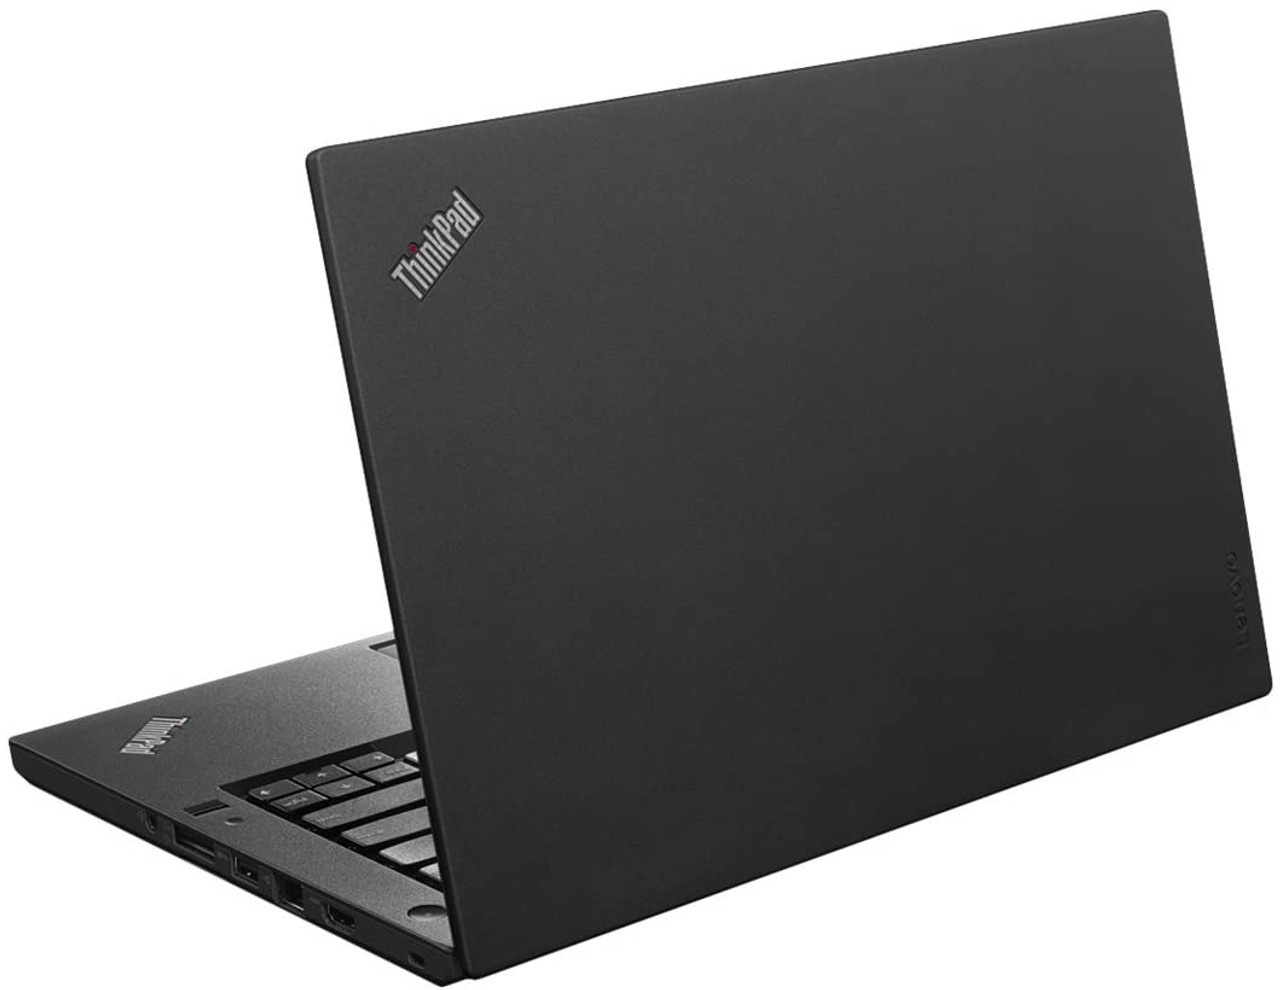 Lenovo Thinkpad T460 14" Laptop Intel Core i5 2.40 GHz 8GB Ram 256GB SSD W10P | Refurbished